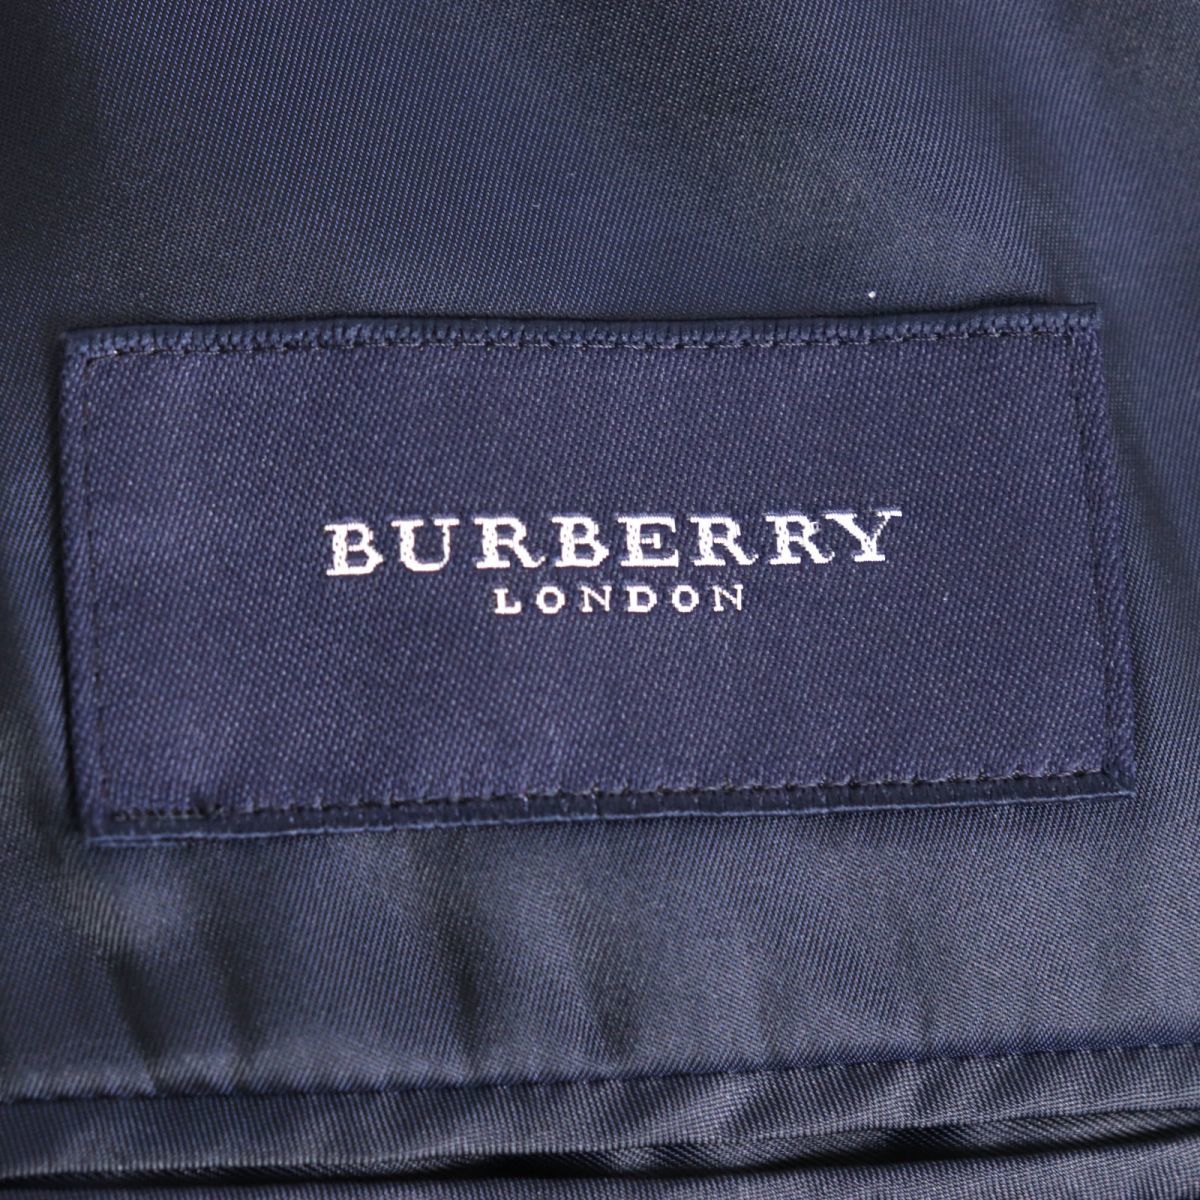  beautiful goods *BURRBRY LONDON Burberry London SUPER120*s cloth use single jacket dark navy 92-82-160 Italy made men's regular goods 